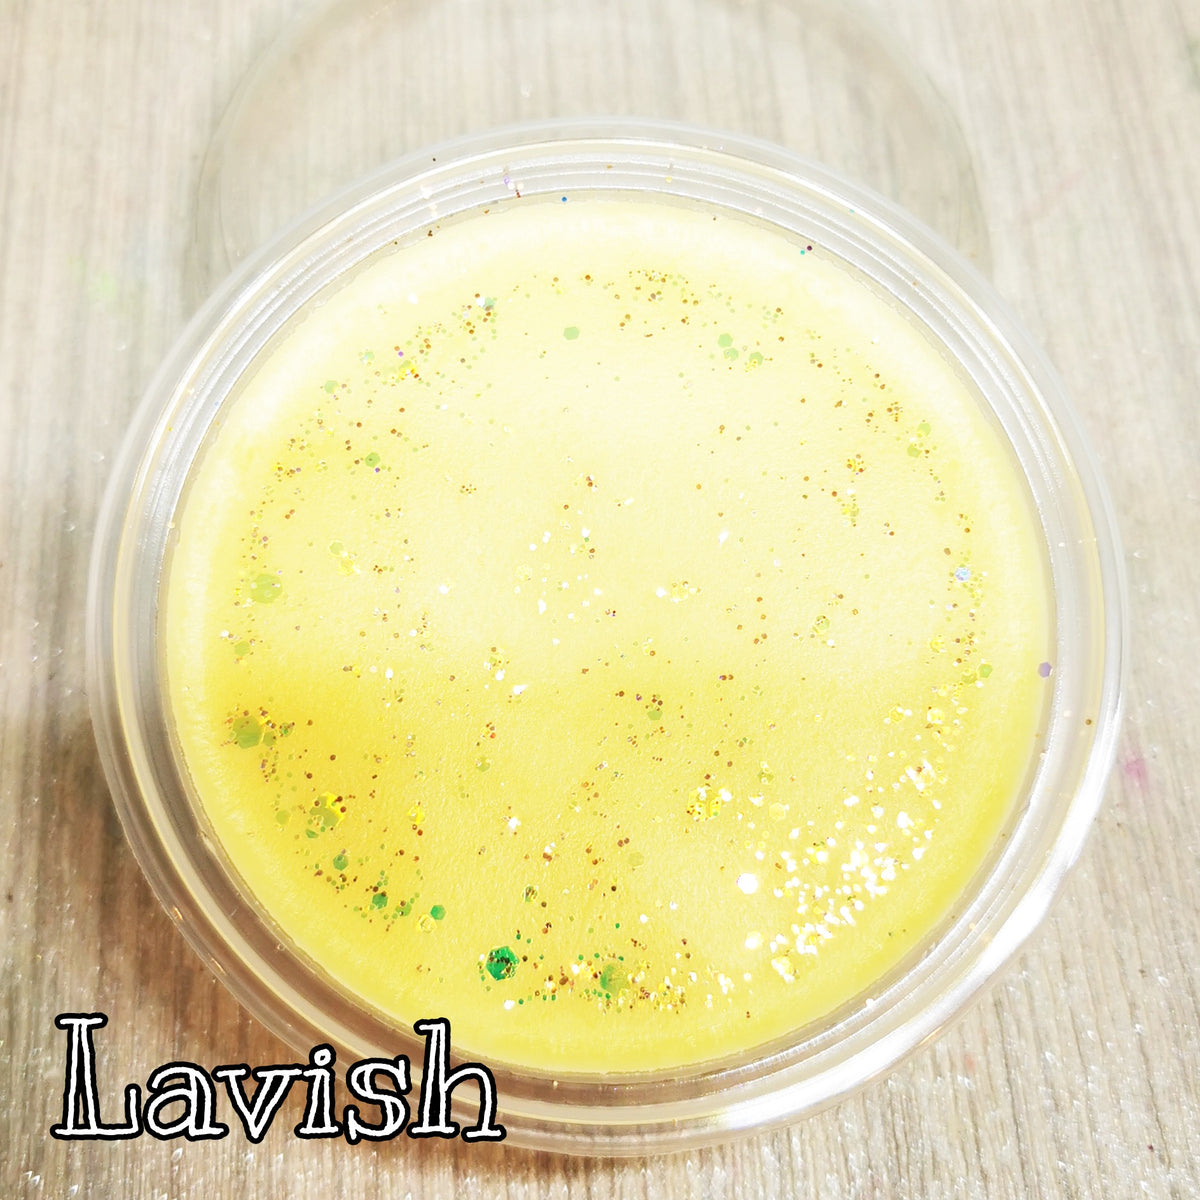 Lavish – Sphynxicorn Wax Emporium